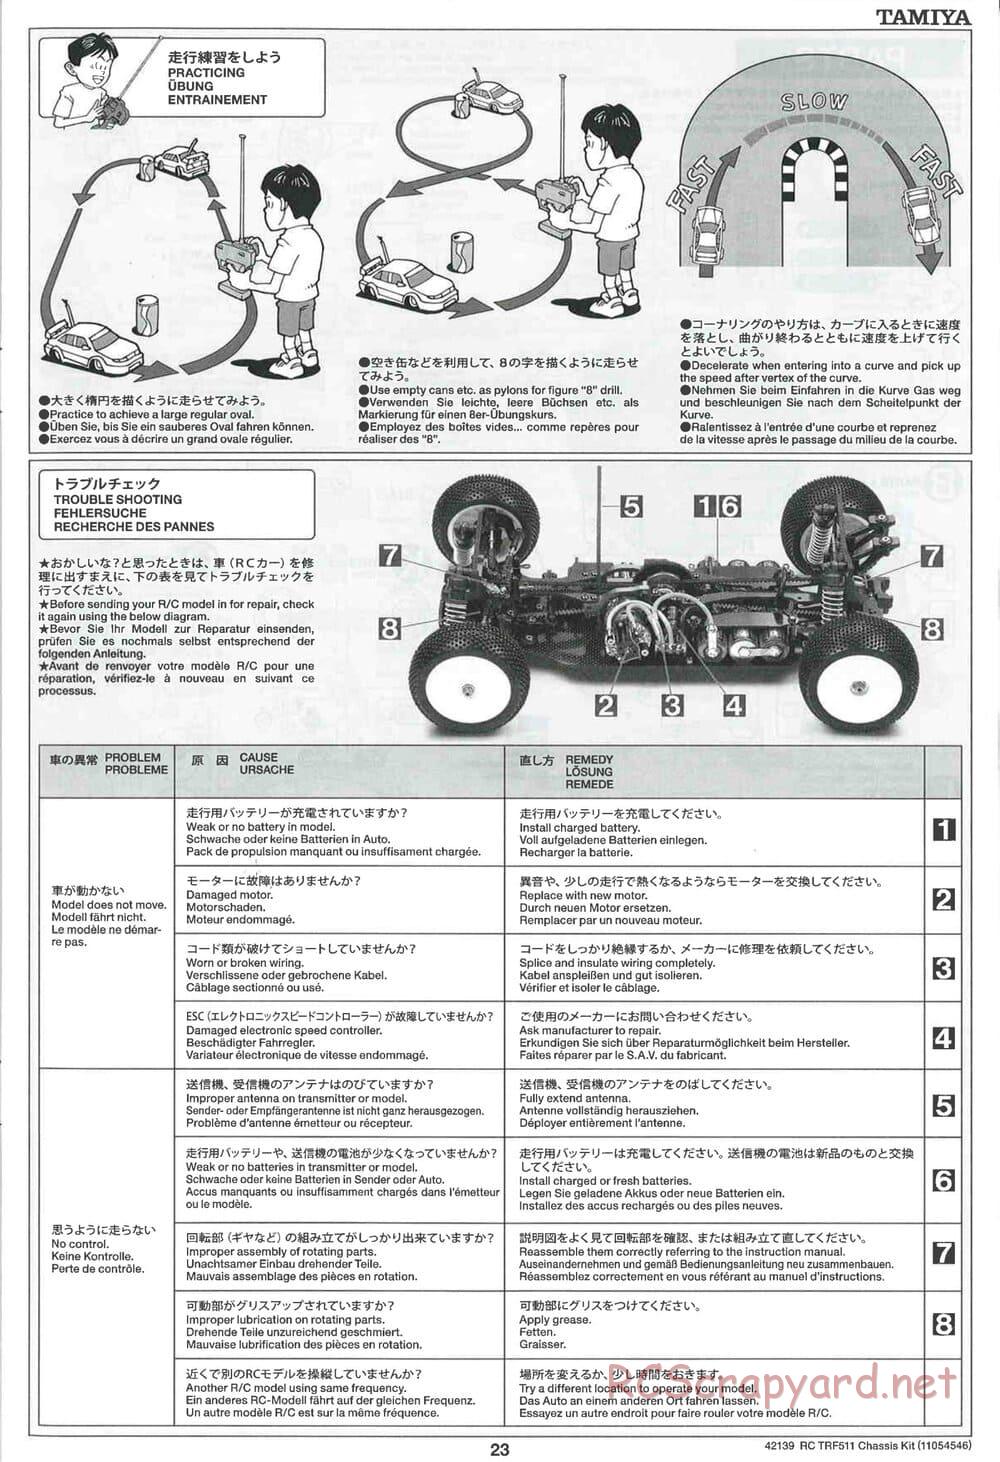 Tamiya - TRF511 Chassis - Manual - Page 23